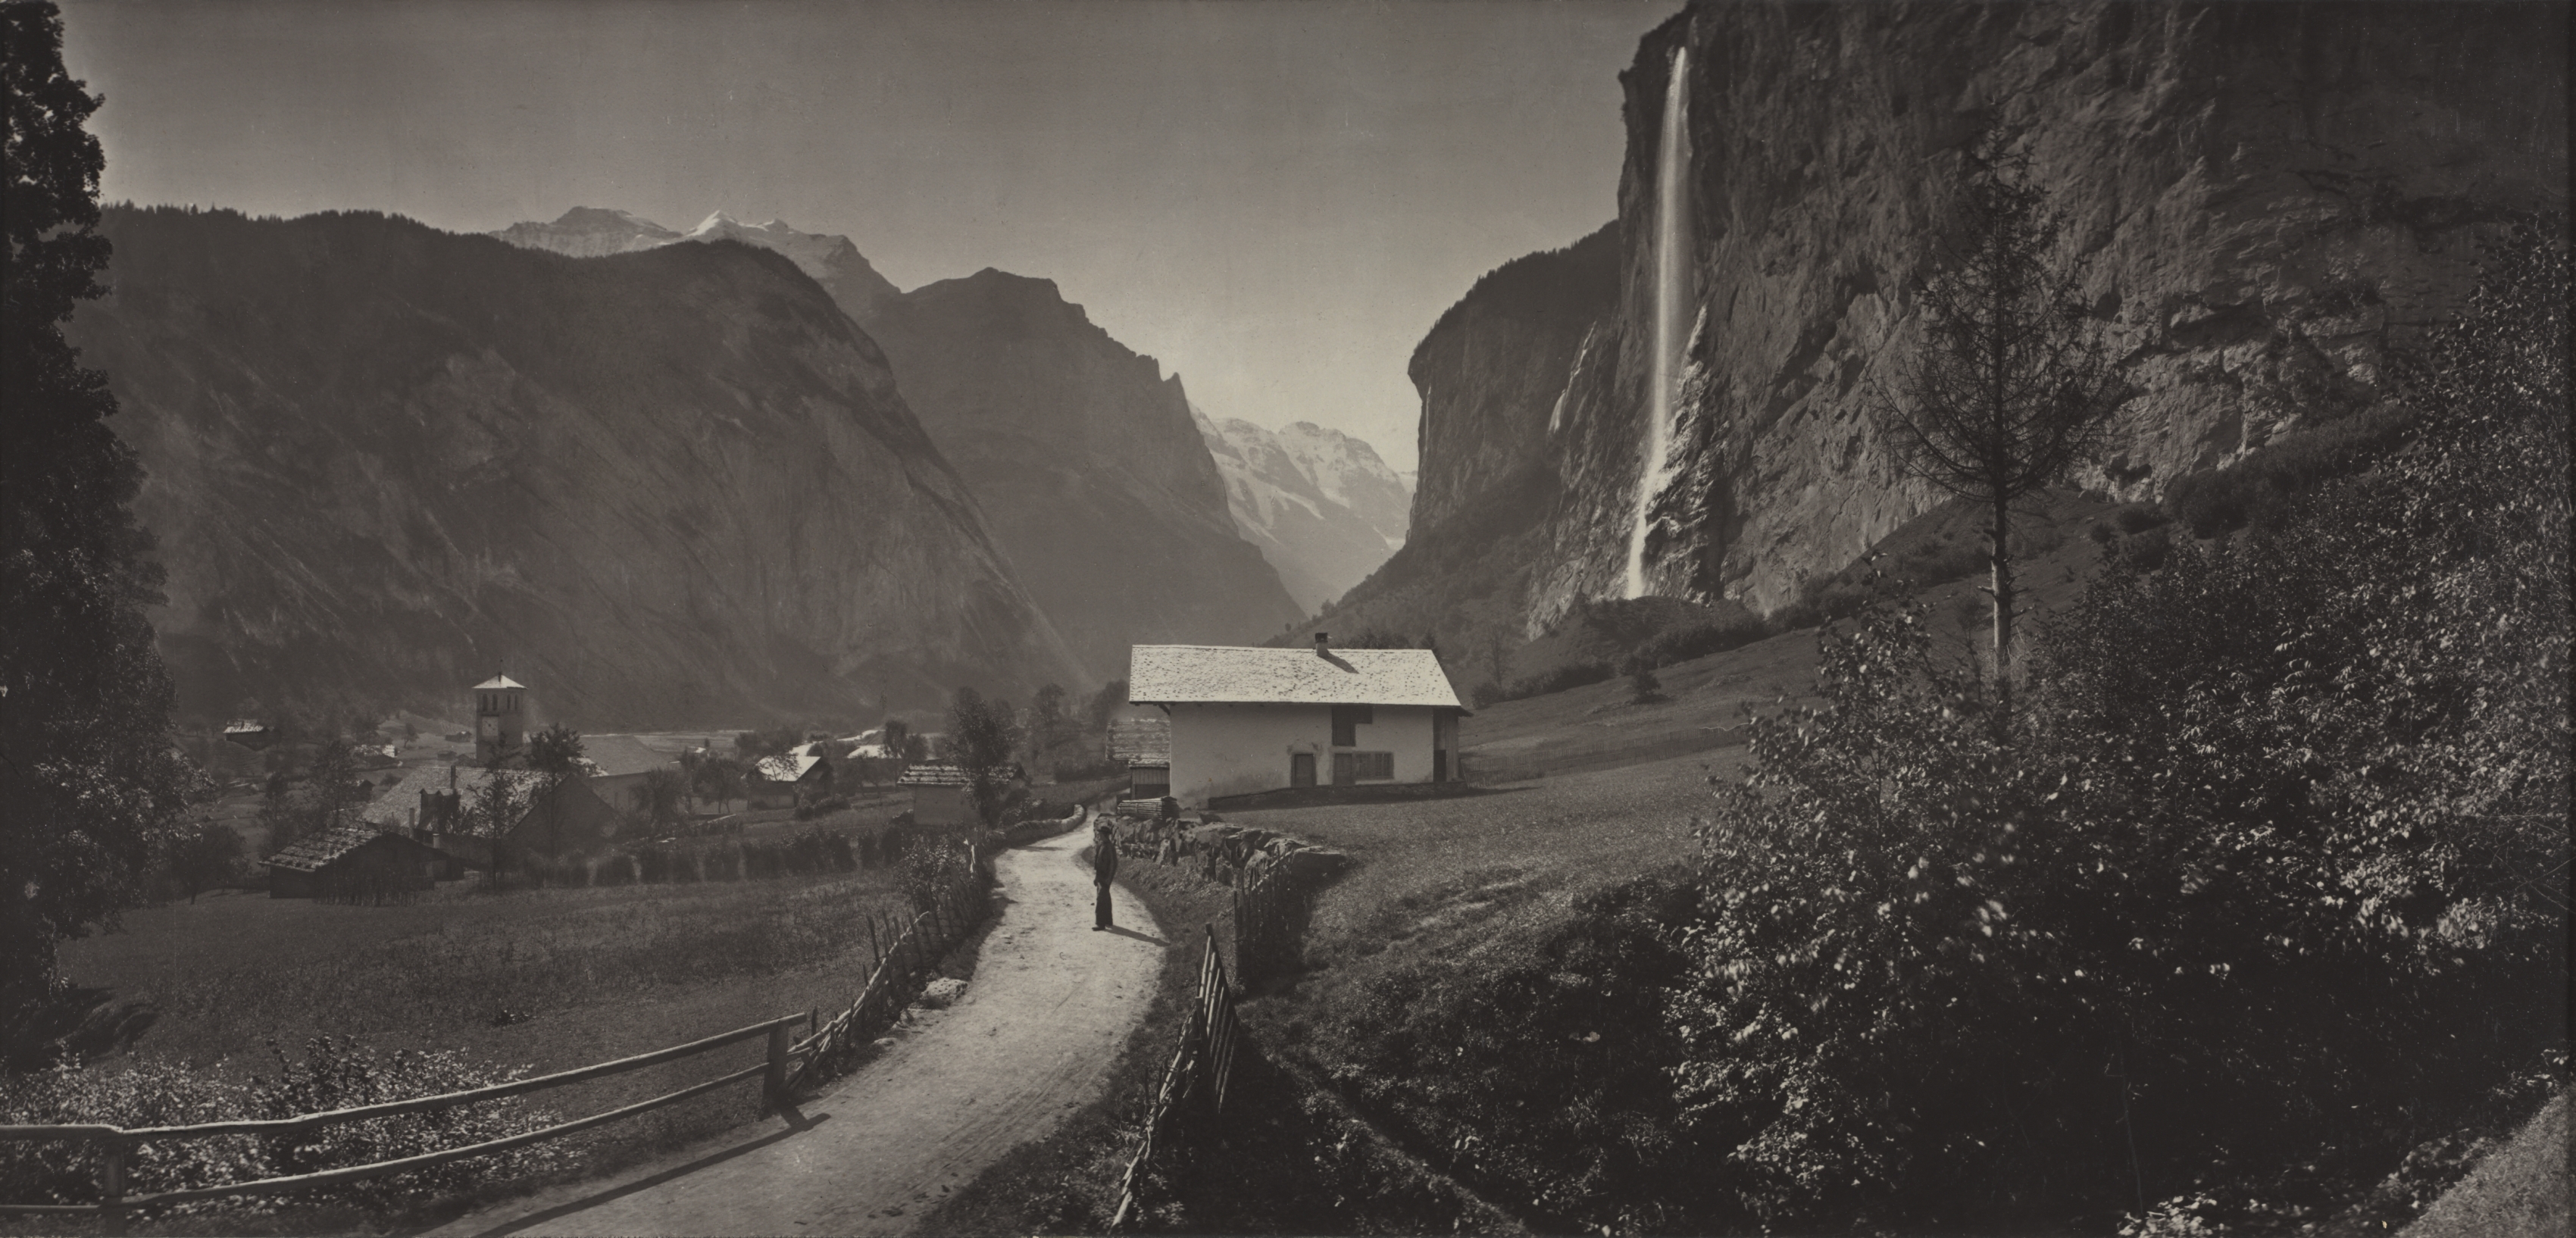 Valley of Lauterbrunnen, Switzerland (from the album Charbons de Braun- vues prises avec l'objectif panoramique mobile, 1868)